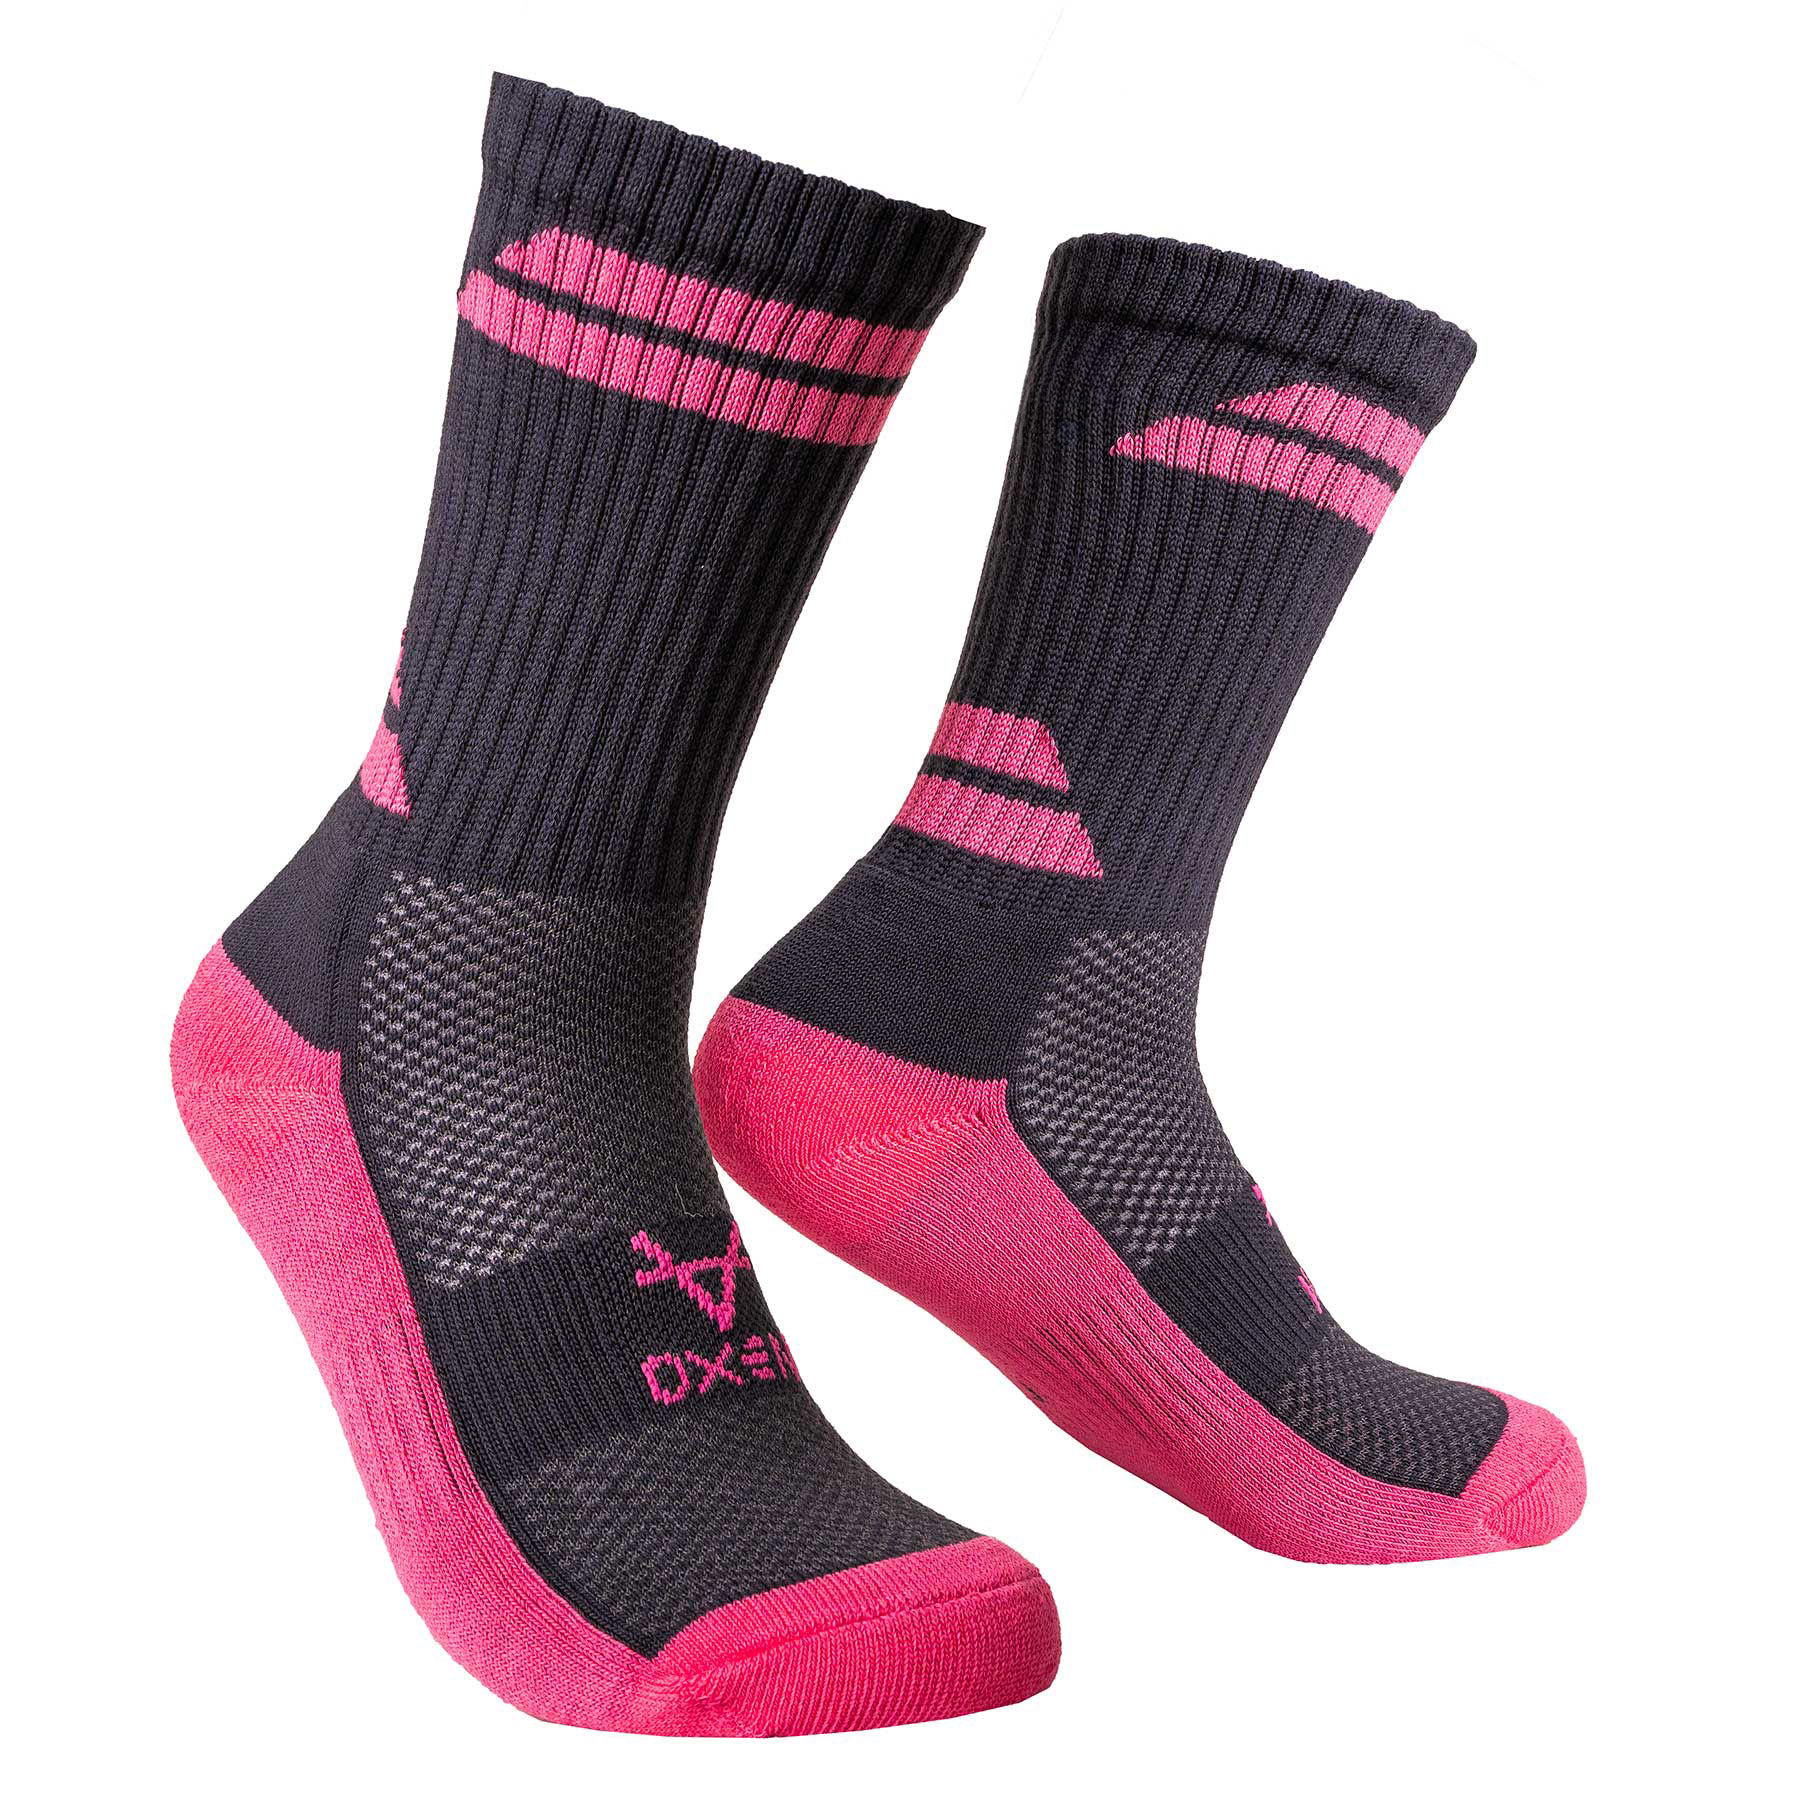 Oxen Contrast Crew Socks Charcoal/Pink - Elite Pro Sports